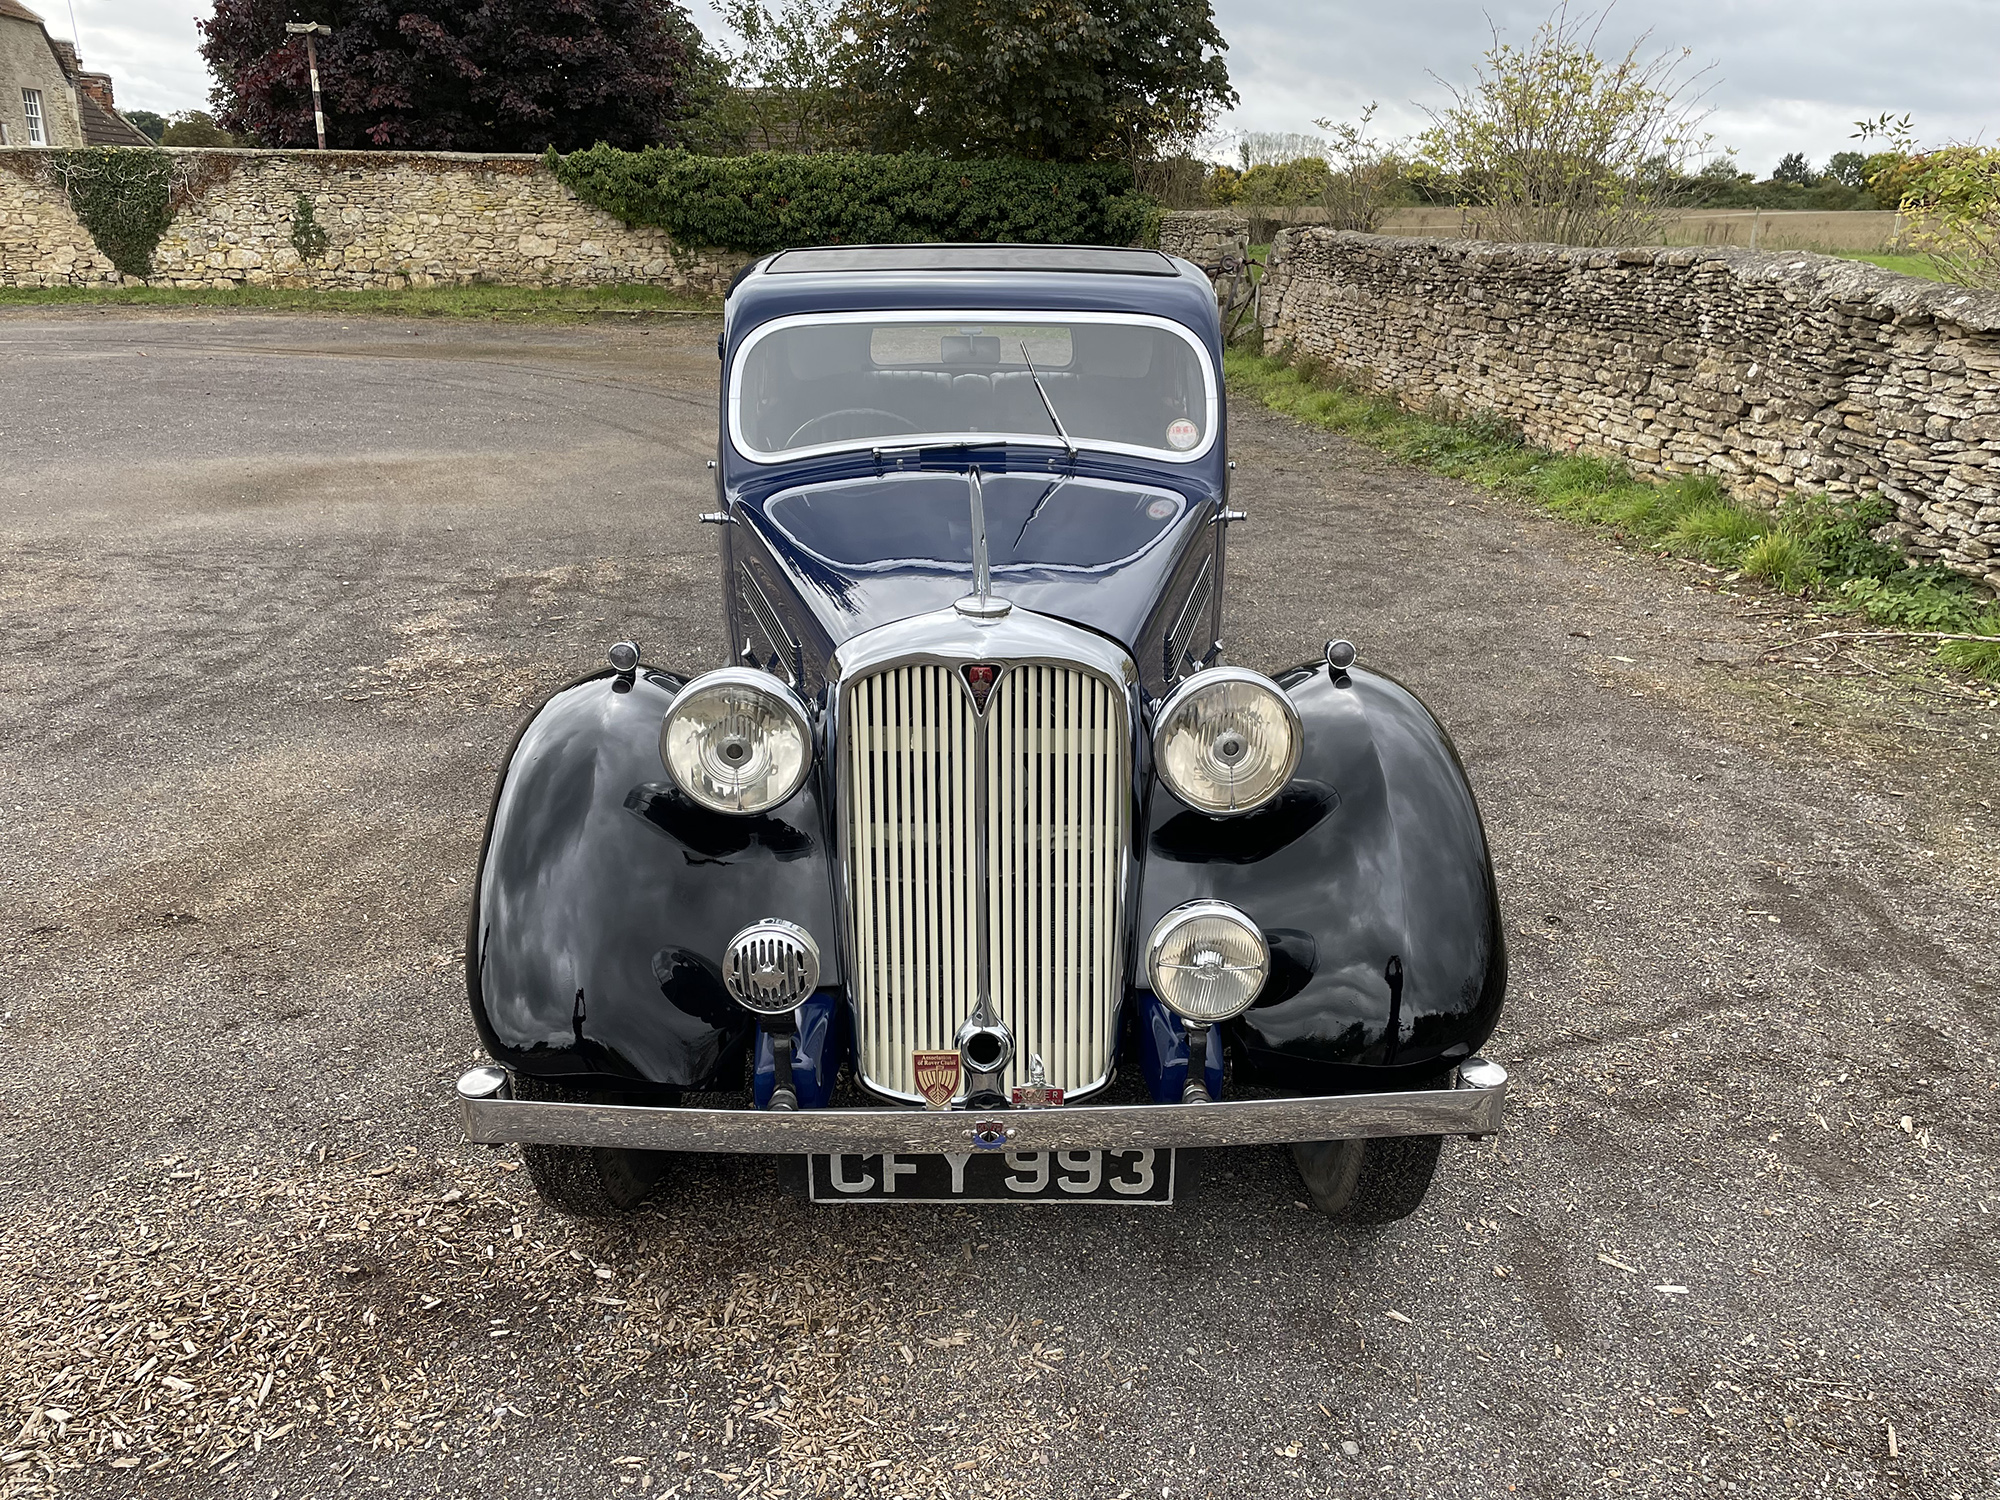 1937 Rover P2 14hp Sports Saloon Reg. no. CFY 993 Chassis no. 722763 Engine no. 722763 - Image 3 of 13